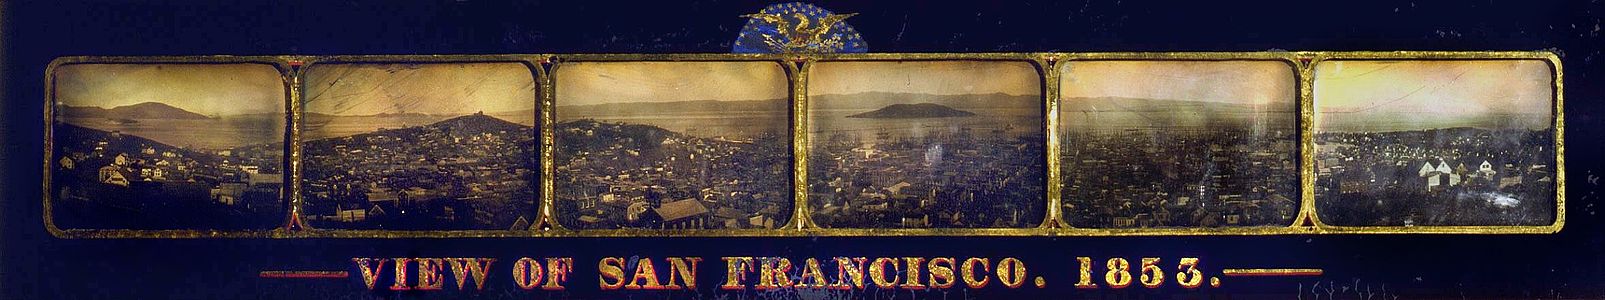 Six daguerreotypes show a panorama of San Francisco, California, in 1853